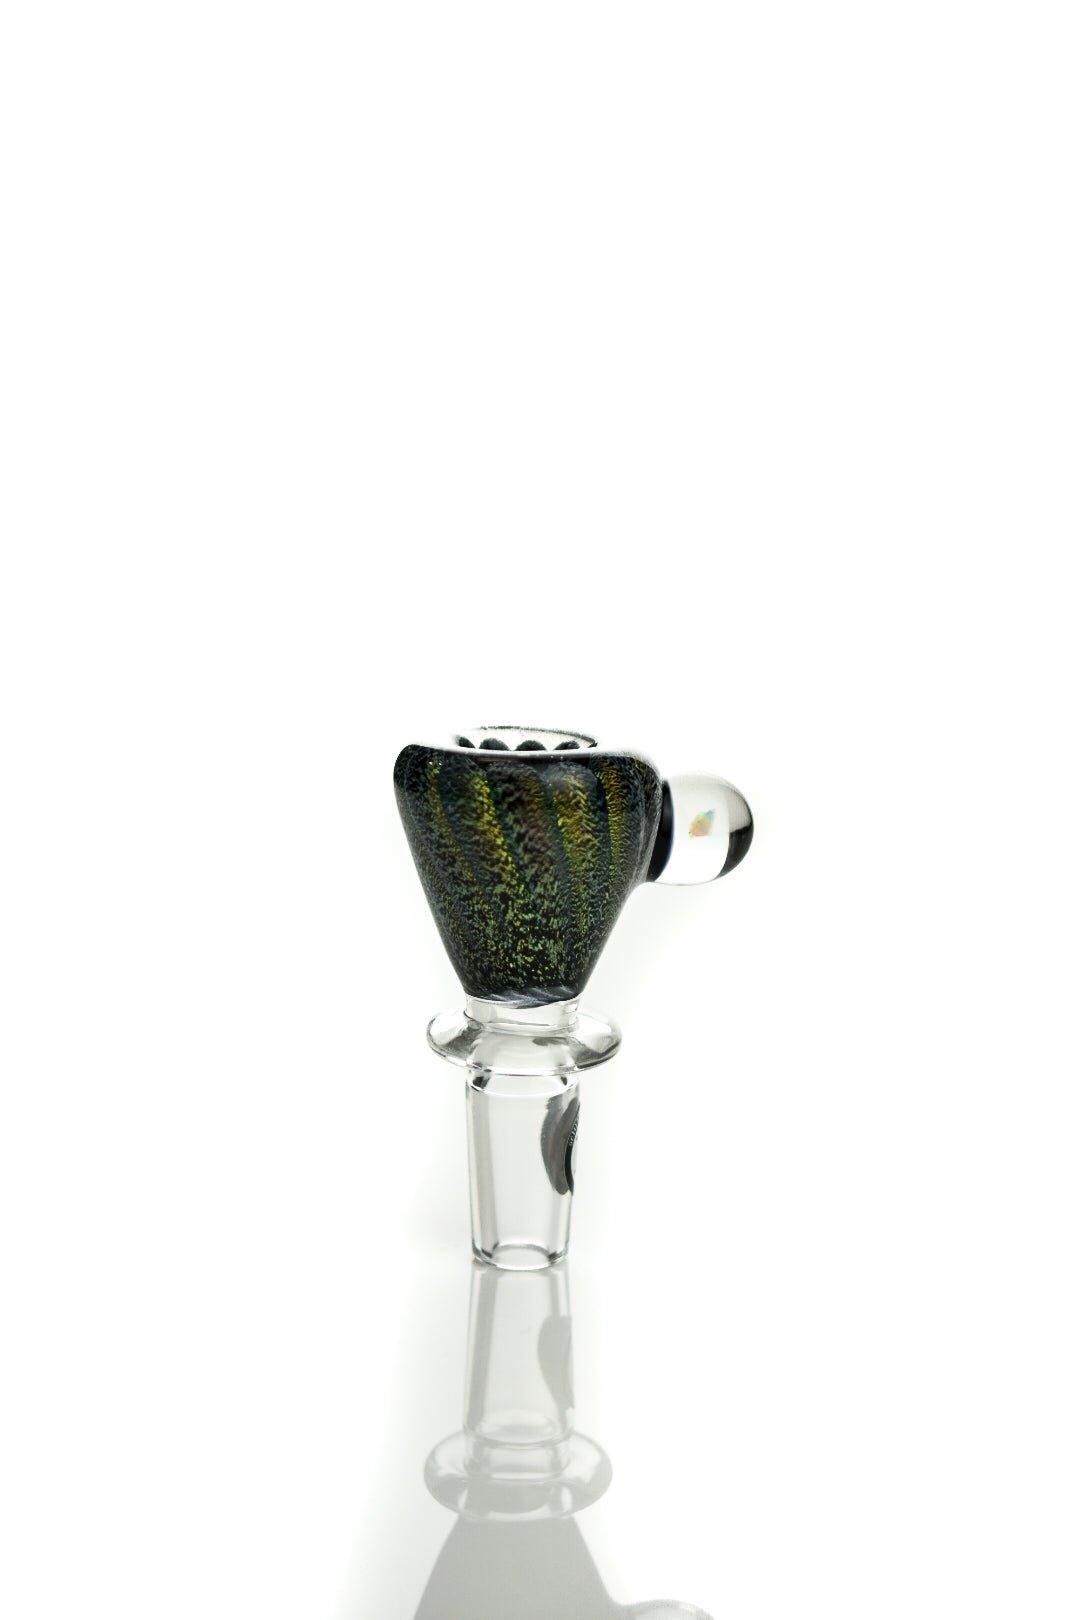 Joe Madigan Glass Accessories Dichro With Opal Dry Herb Slide Made By Joe Madigan